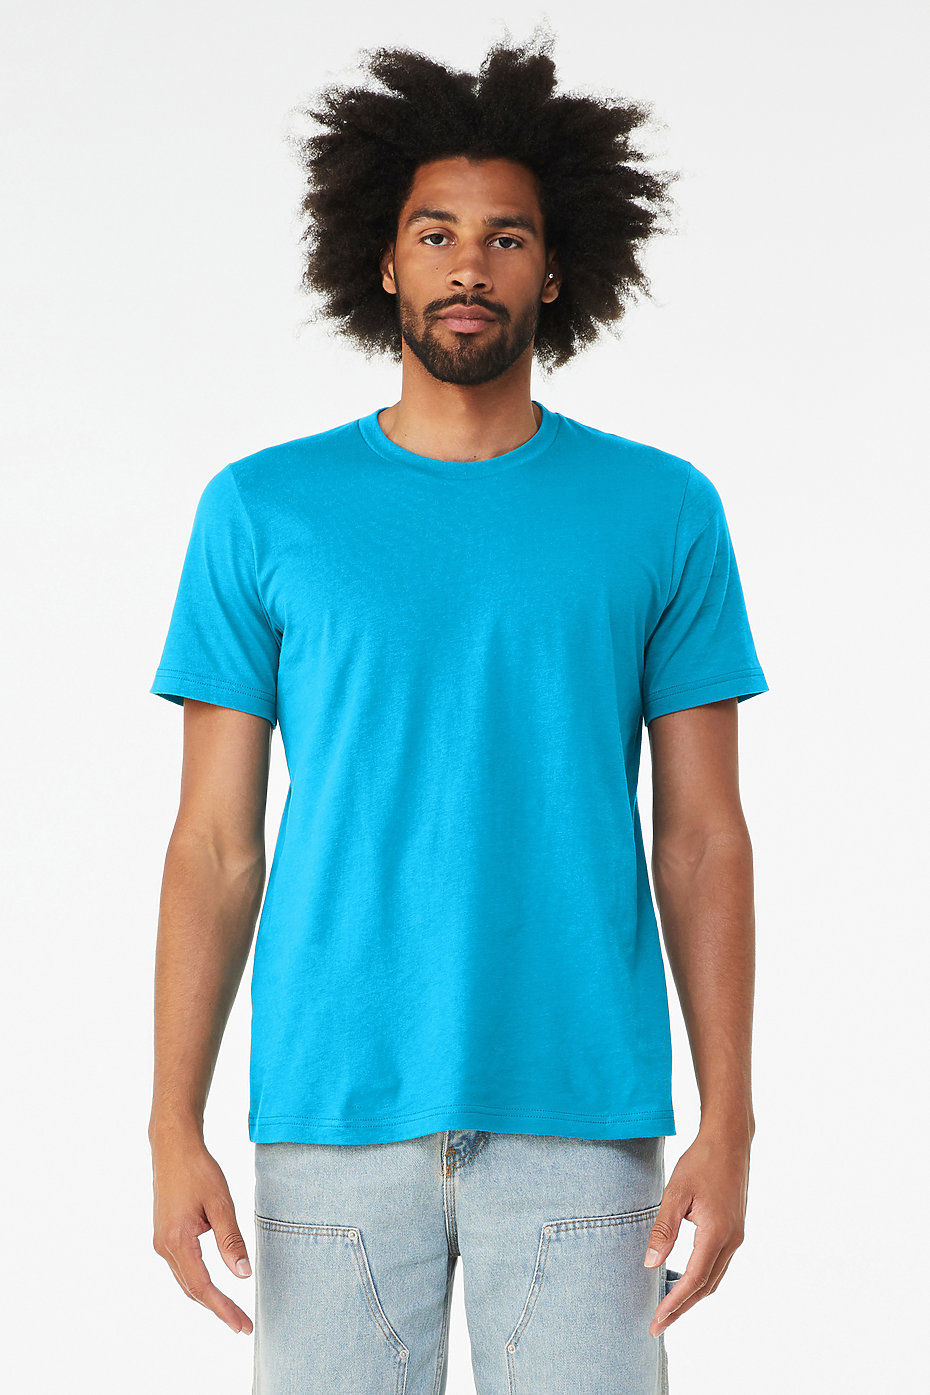 Short-sleeved baseball shirt / T-shirt template - Stock